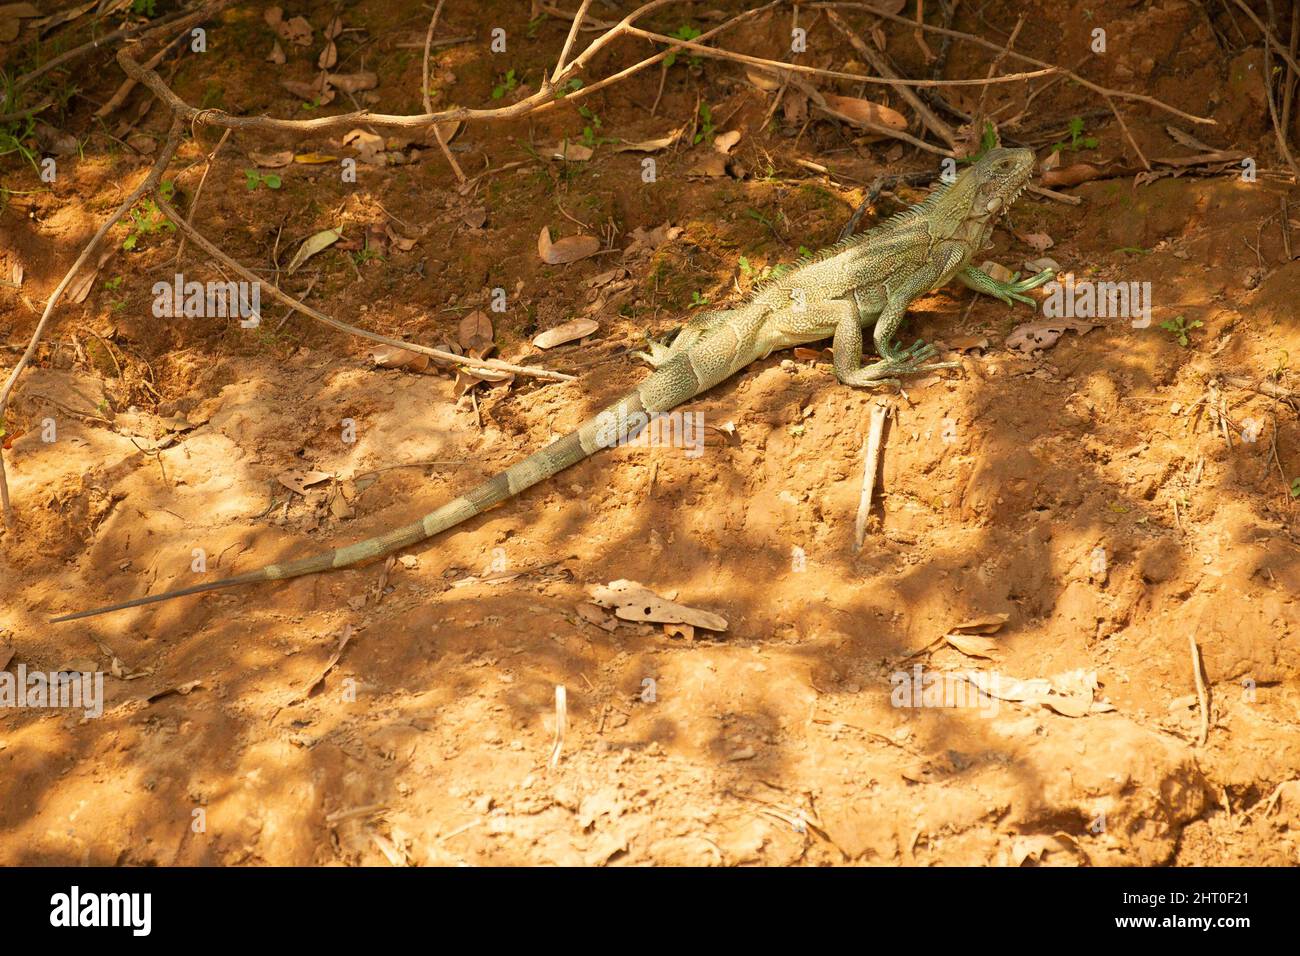 Green iguana (Iguana iguana) on sandy ground. Northern Pantanal, Brazil Stock Photo